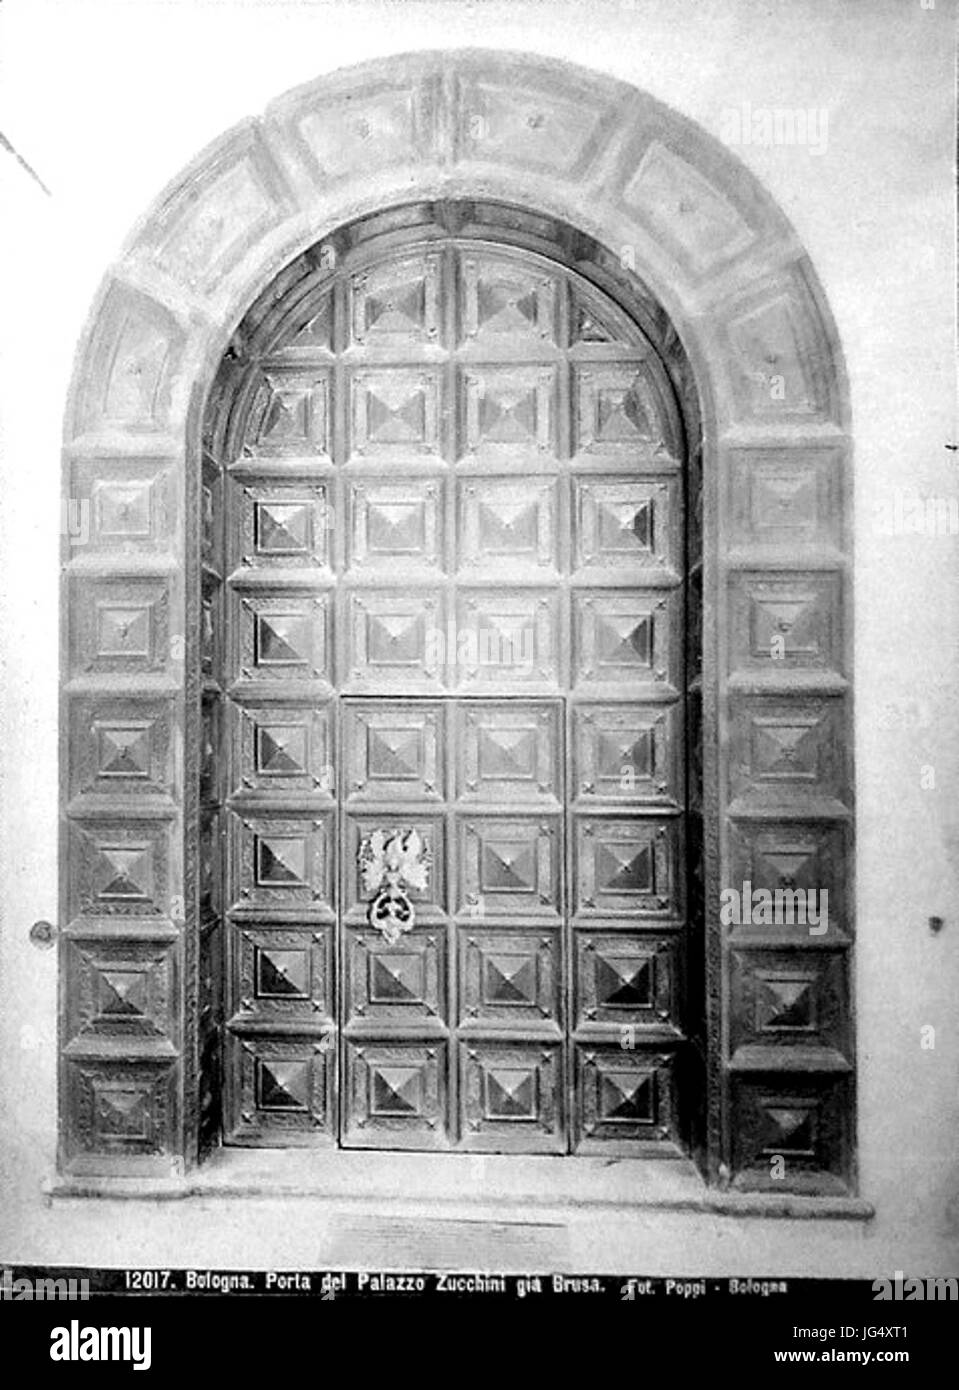 Poppi, Pietro (1833-1914) - n. 12017 - Bologna - Porta del Palazzo Zucchini già Brusa Stock Photo